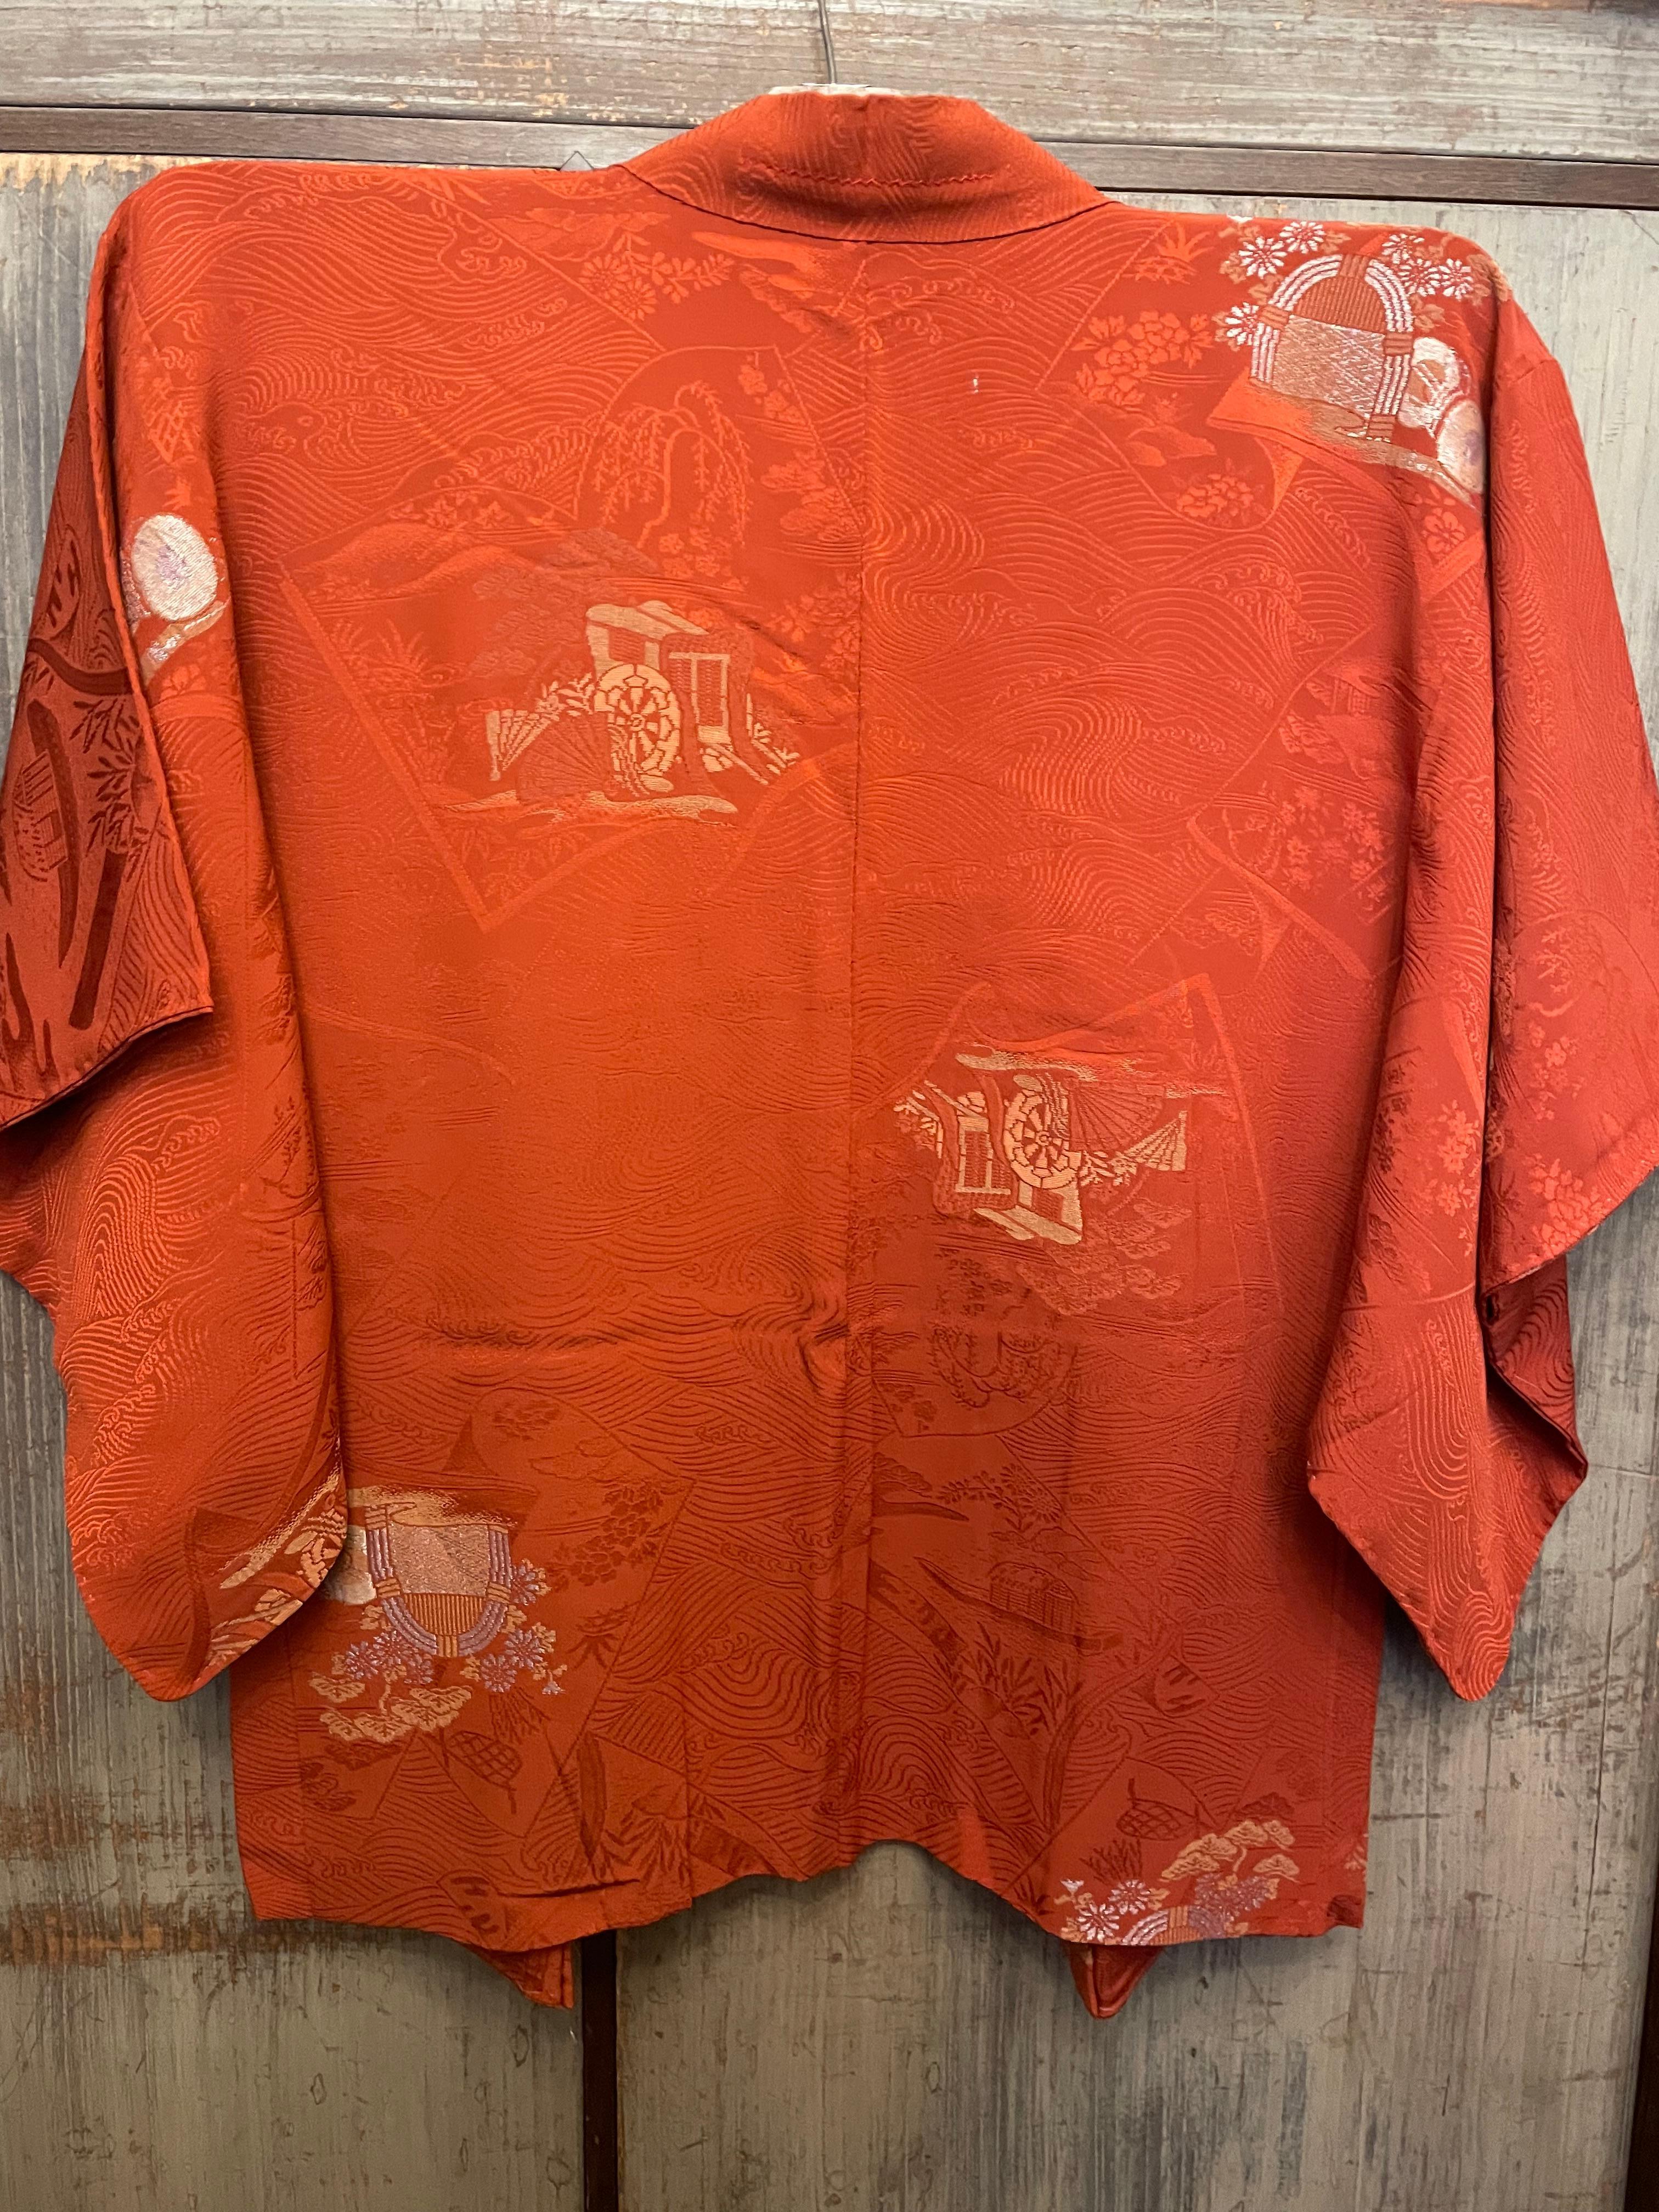 Japanische Seiden Haori Jacke Rot-Orange Hanaguruma 1970er Jahre (20. Jahrhundert) im Angebot